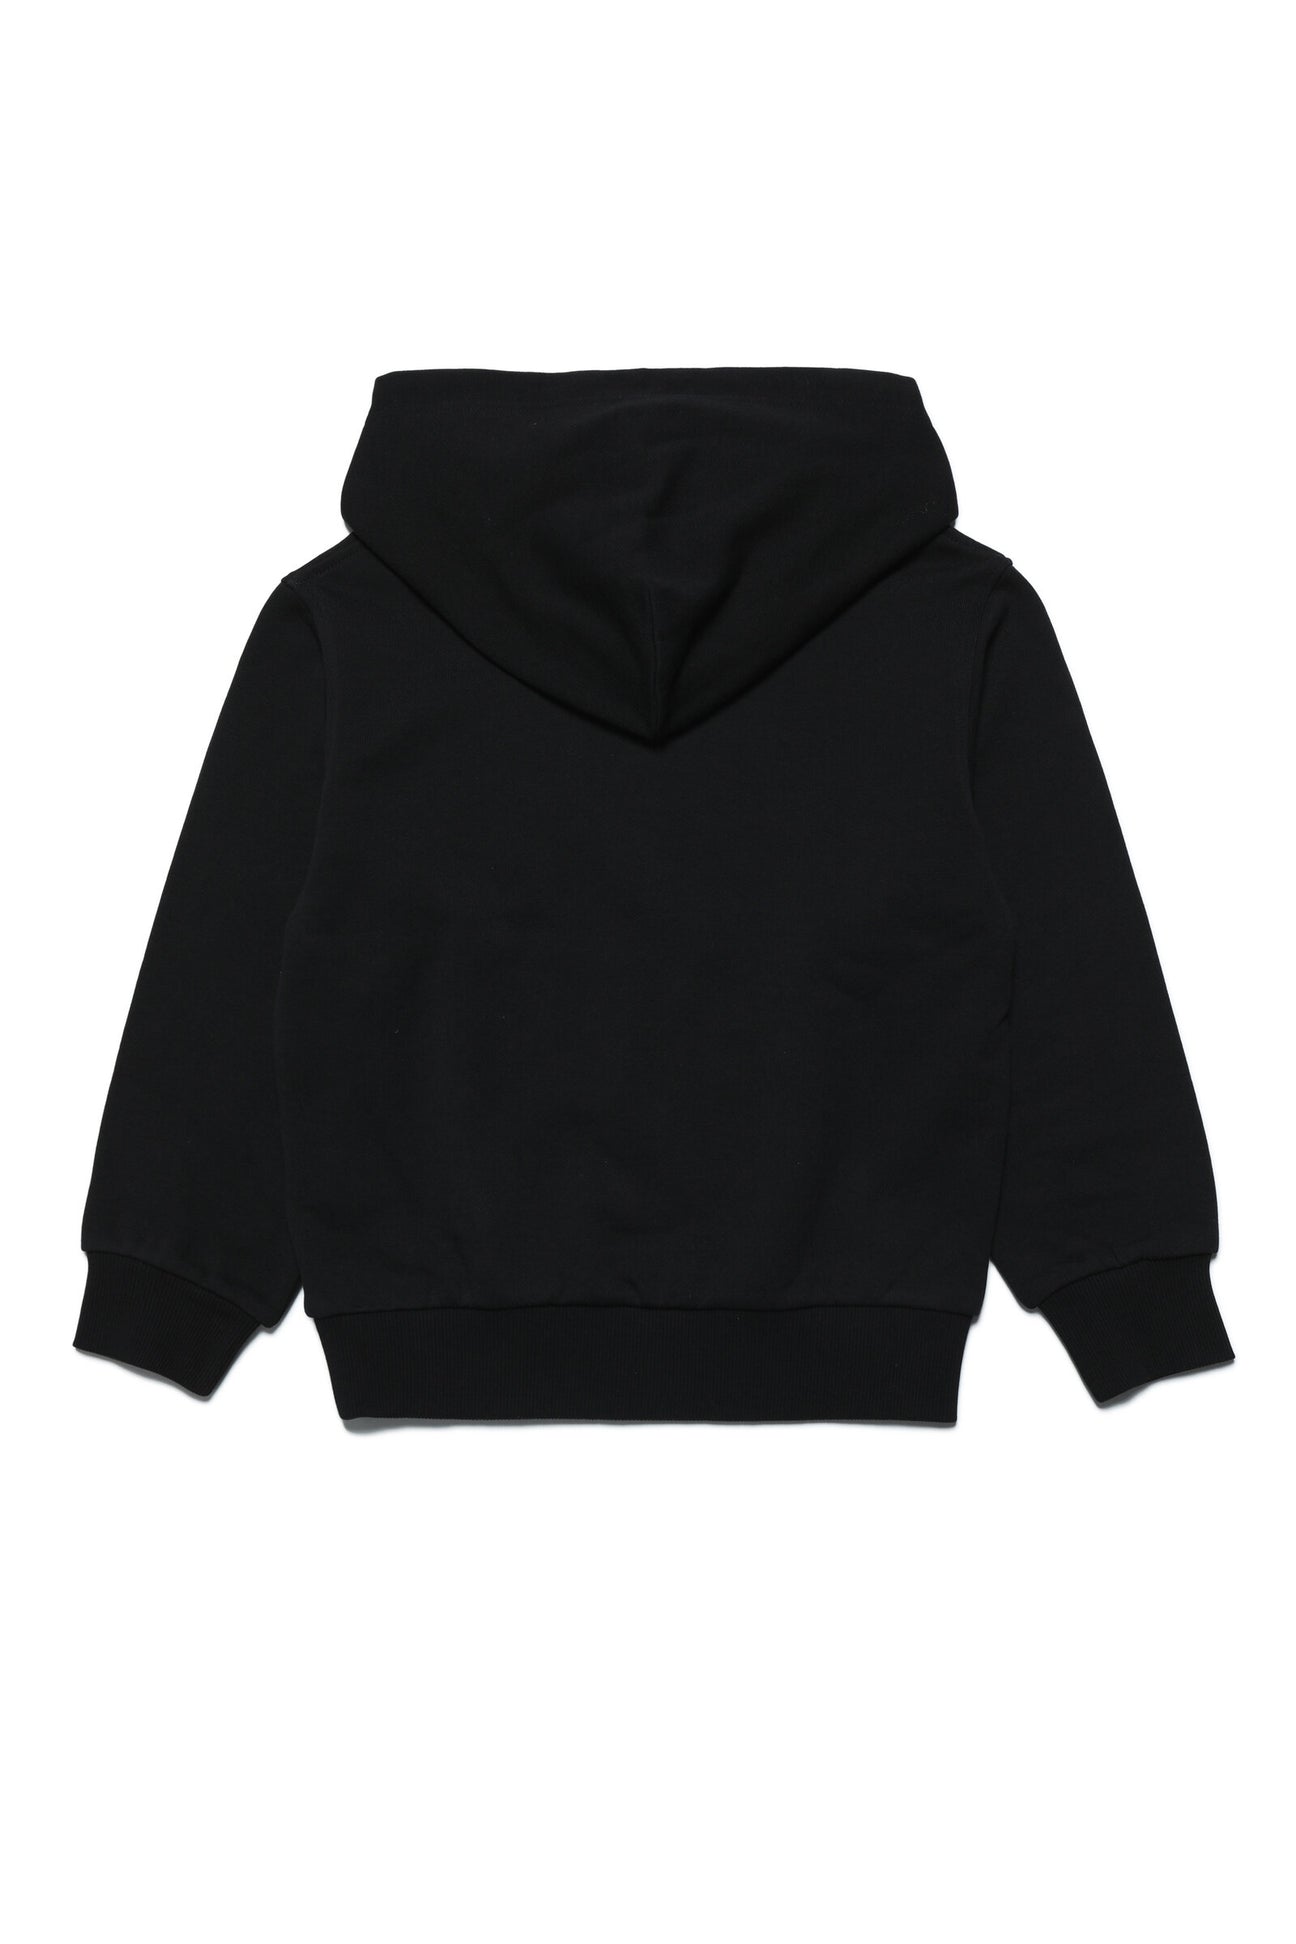 Black hooded sweatshirt with watercolor effect logo Black hooded sweatshirt with watercolor effect logo